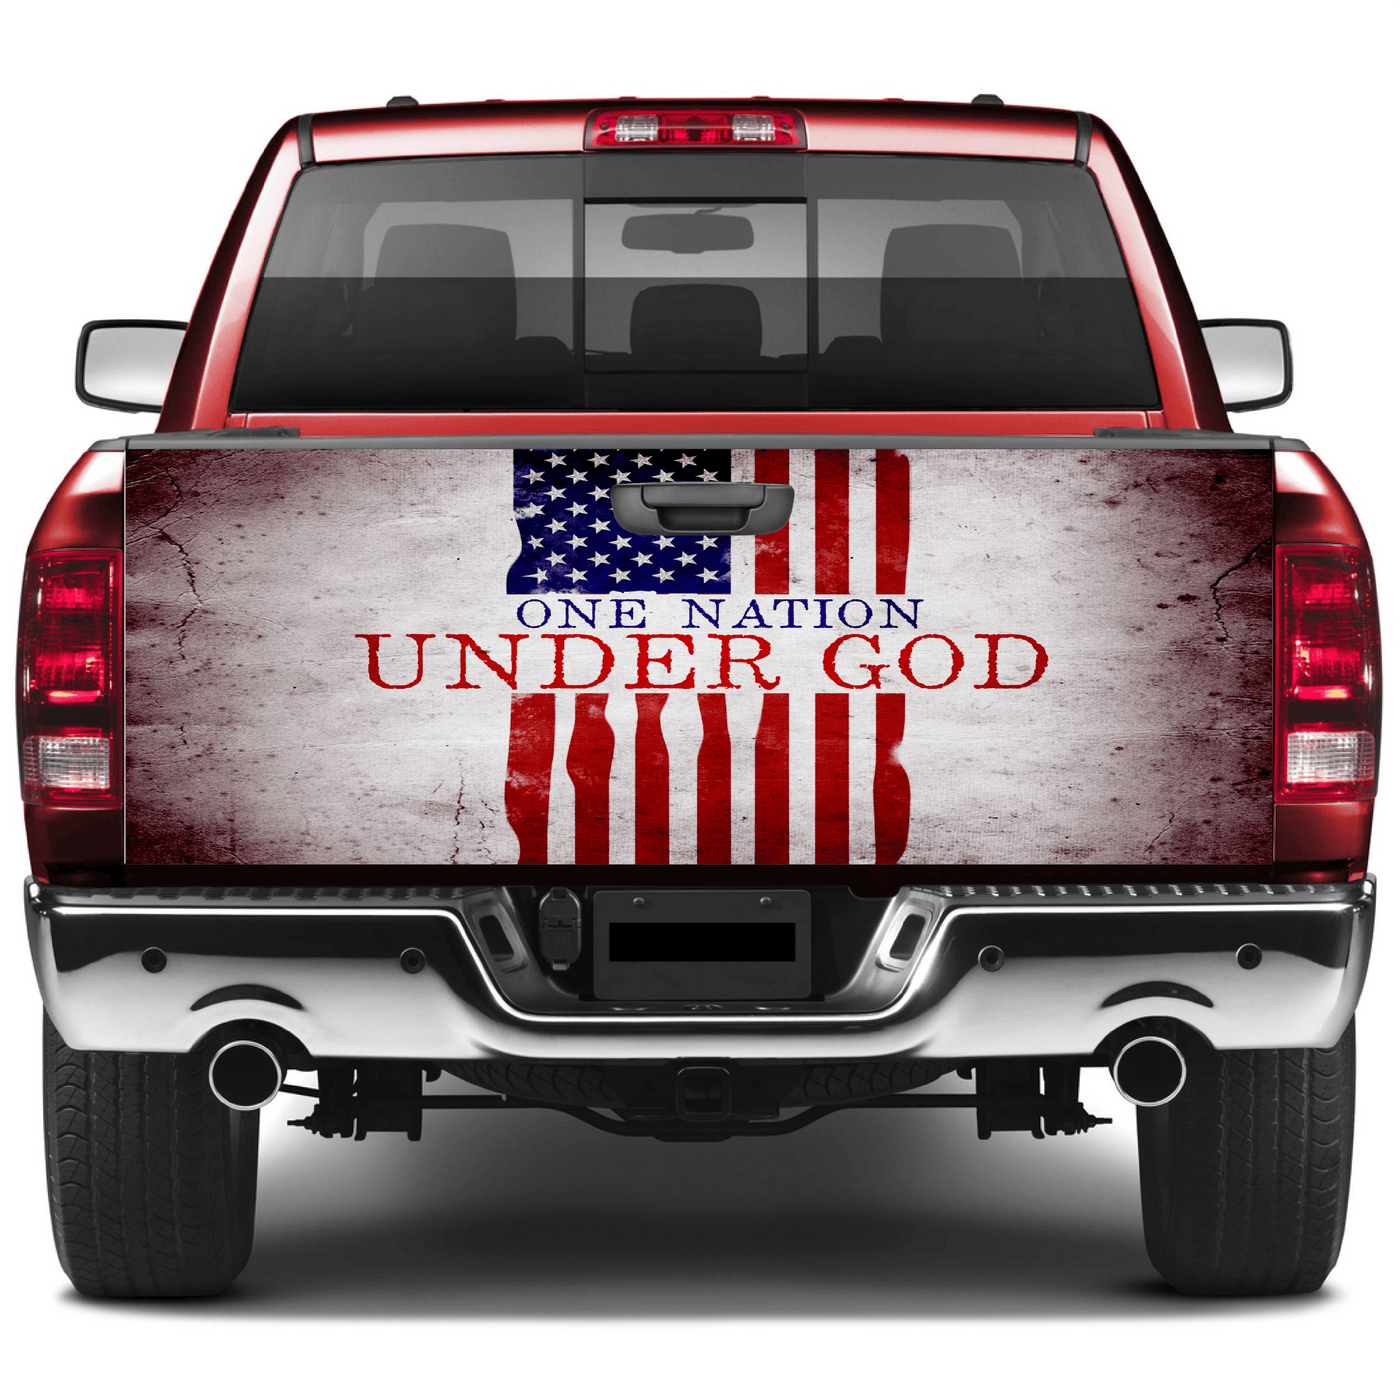 Tailgate Wraps For Trucks Wrap Vinyl Car Decals One Nation Under God SUV Car Sticker